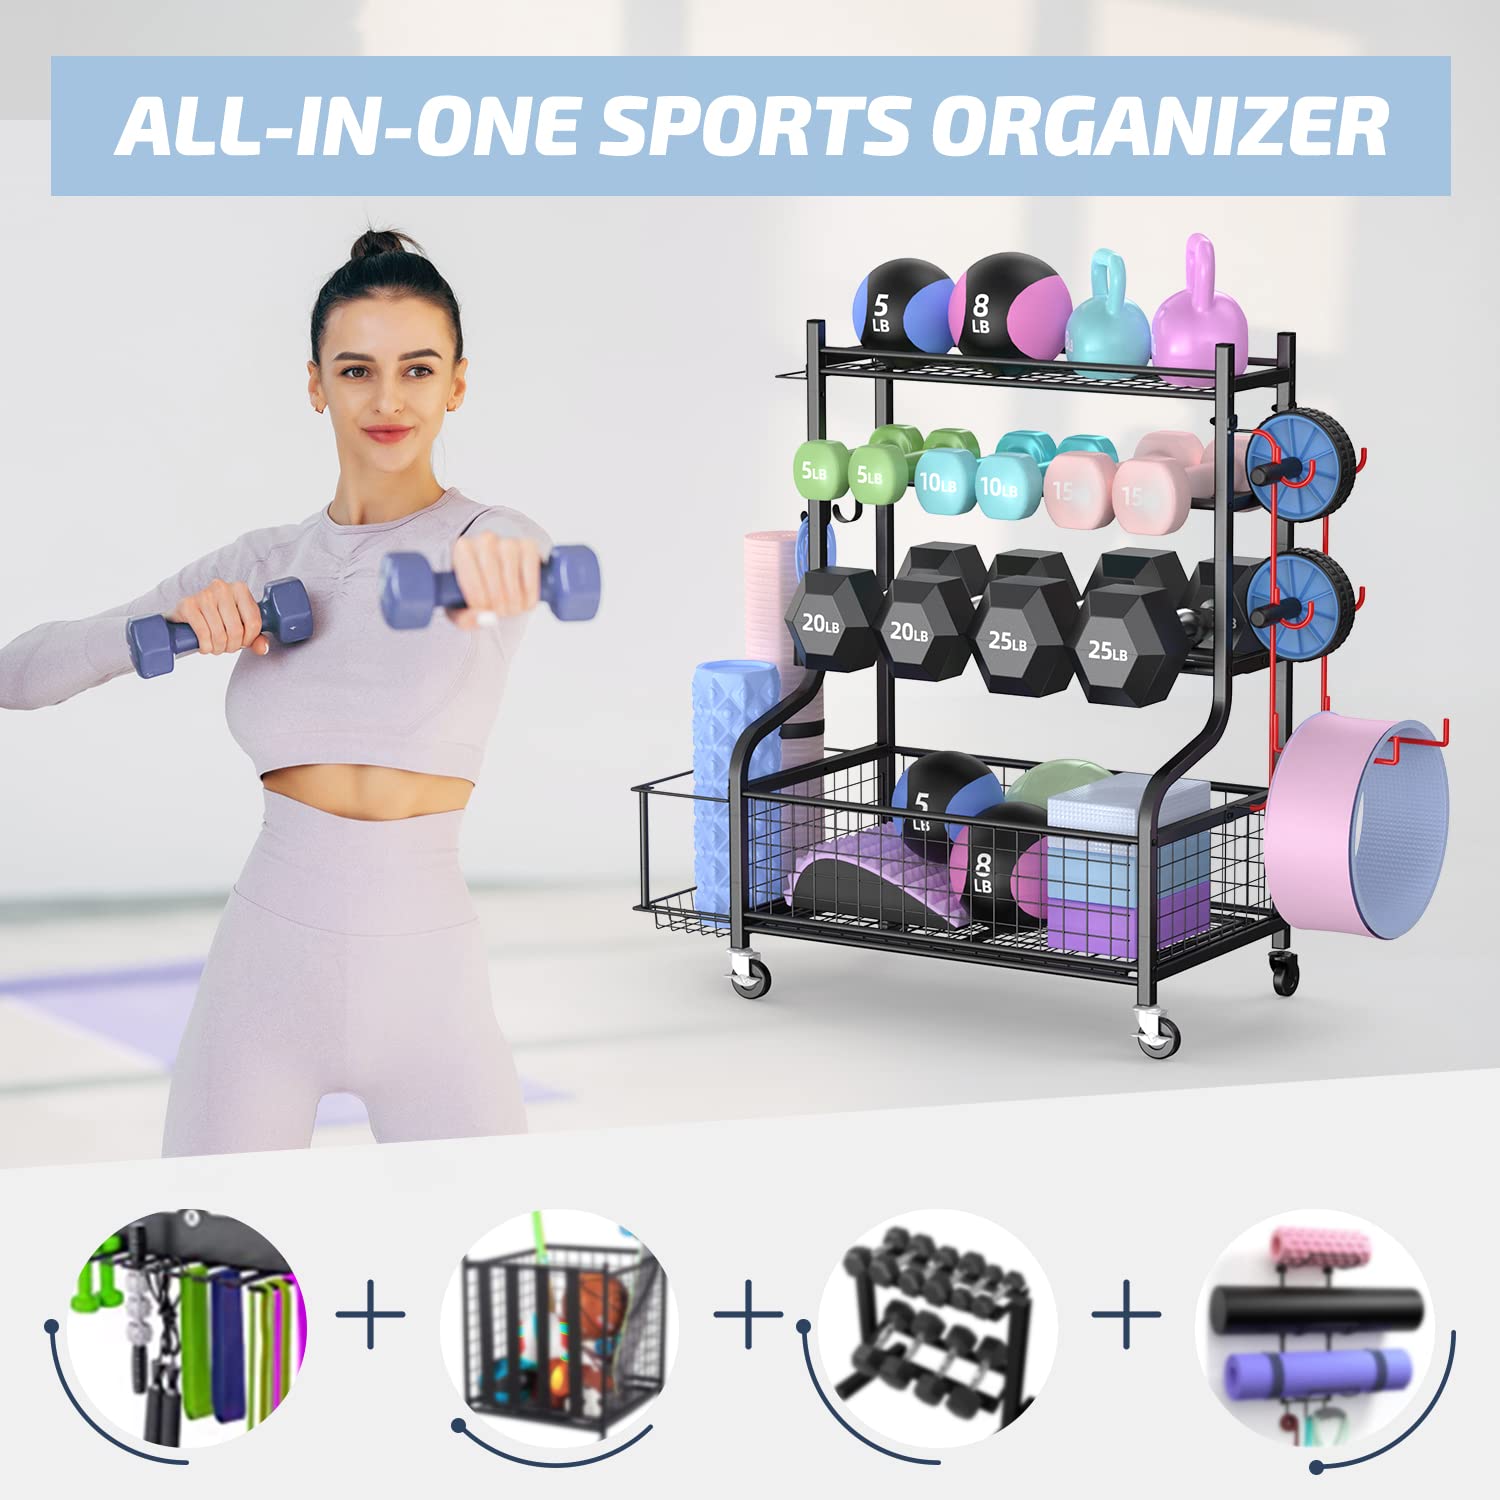 Y&M Yoga Mat Storage Racks, Home Gym Storage Rack for Organizing  Kettlebells Dumbbells Foam Roller, All-in-One Workout Equipment Storage  Organizer